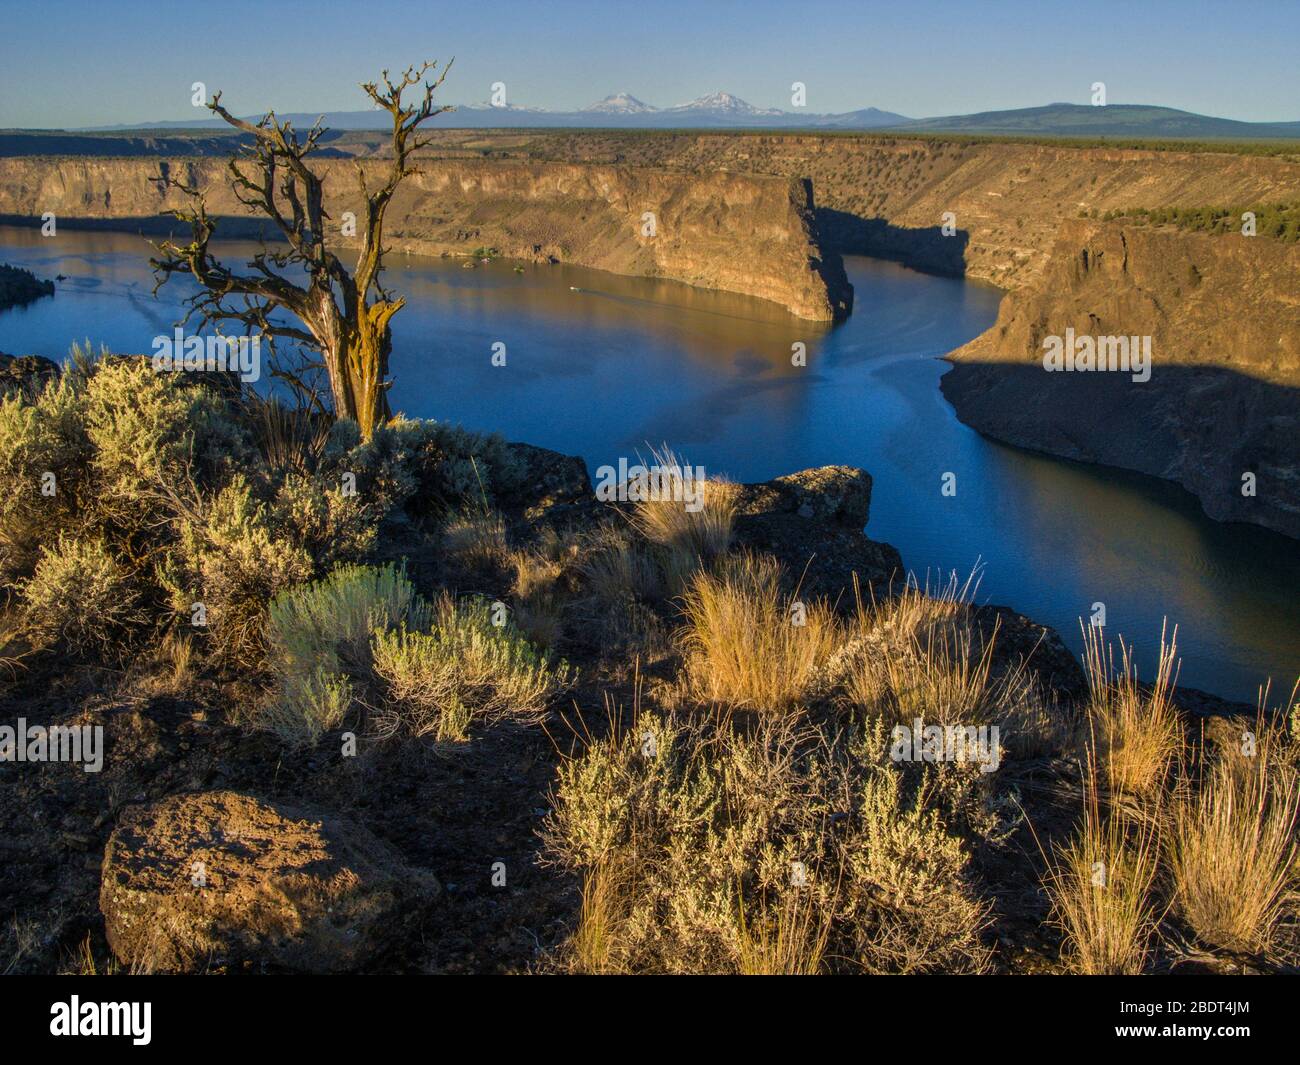 Lake Billy Chinook, Culver, Oregon USA Stock Photo